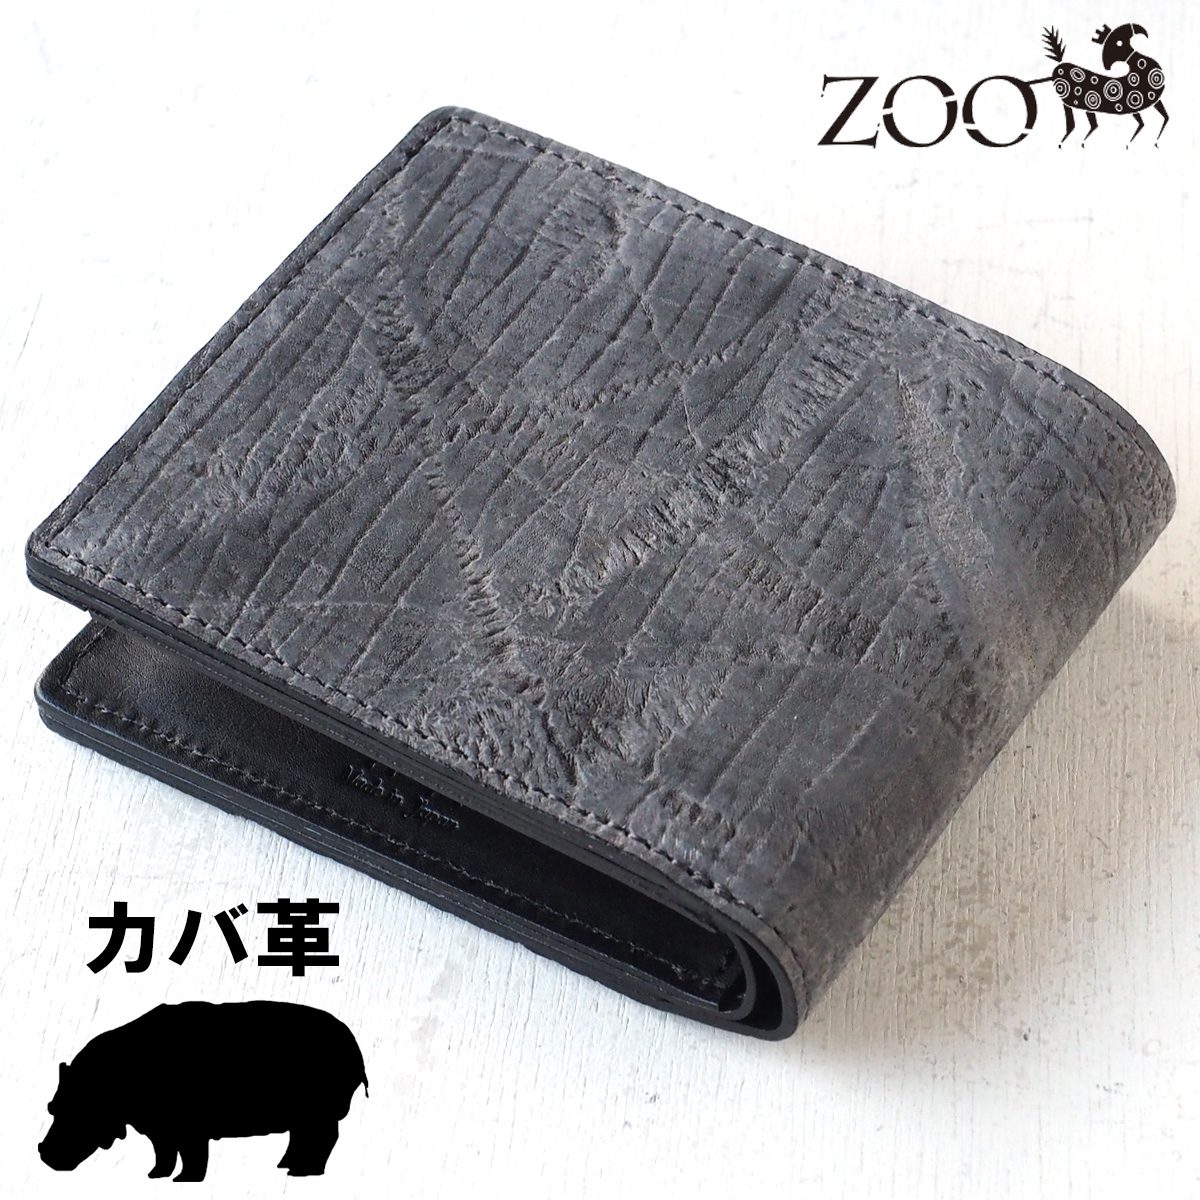 ZOO（ズー） カバ革 バジャービルフォールド18 コンパクト 二つ折り財布 グレー [Z-ZBF-020-GY] 革製品 革小物